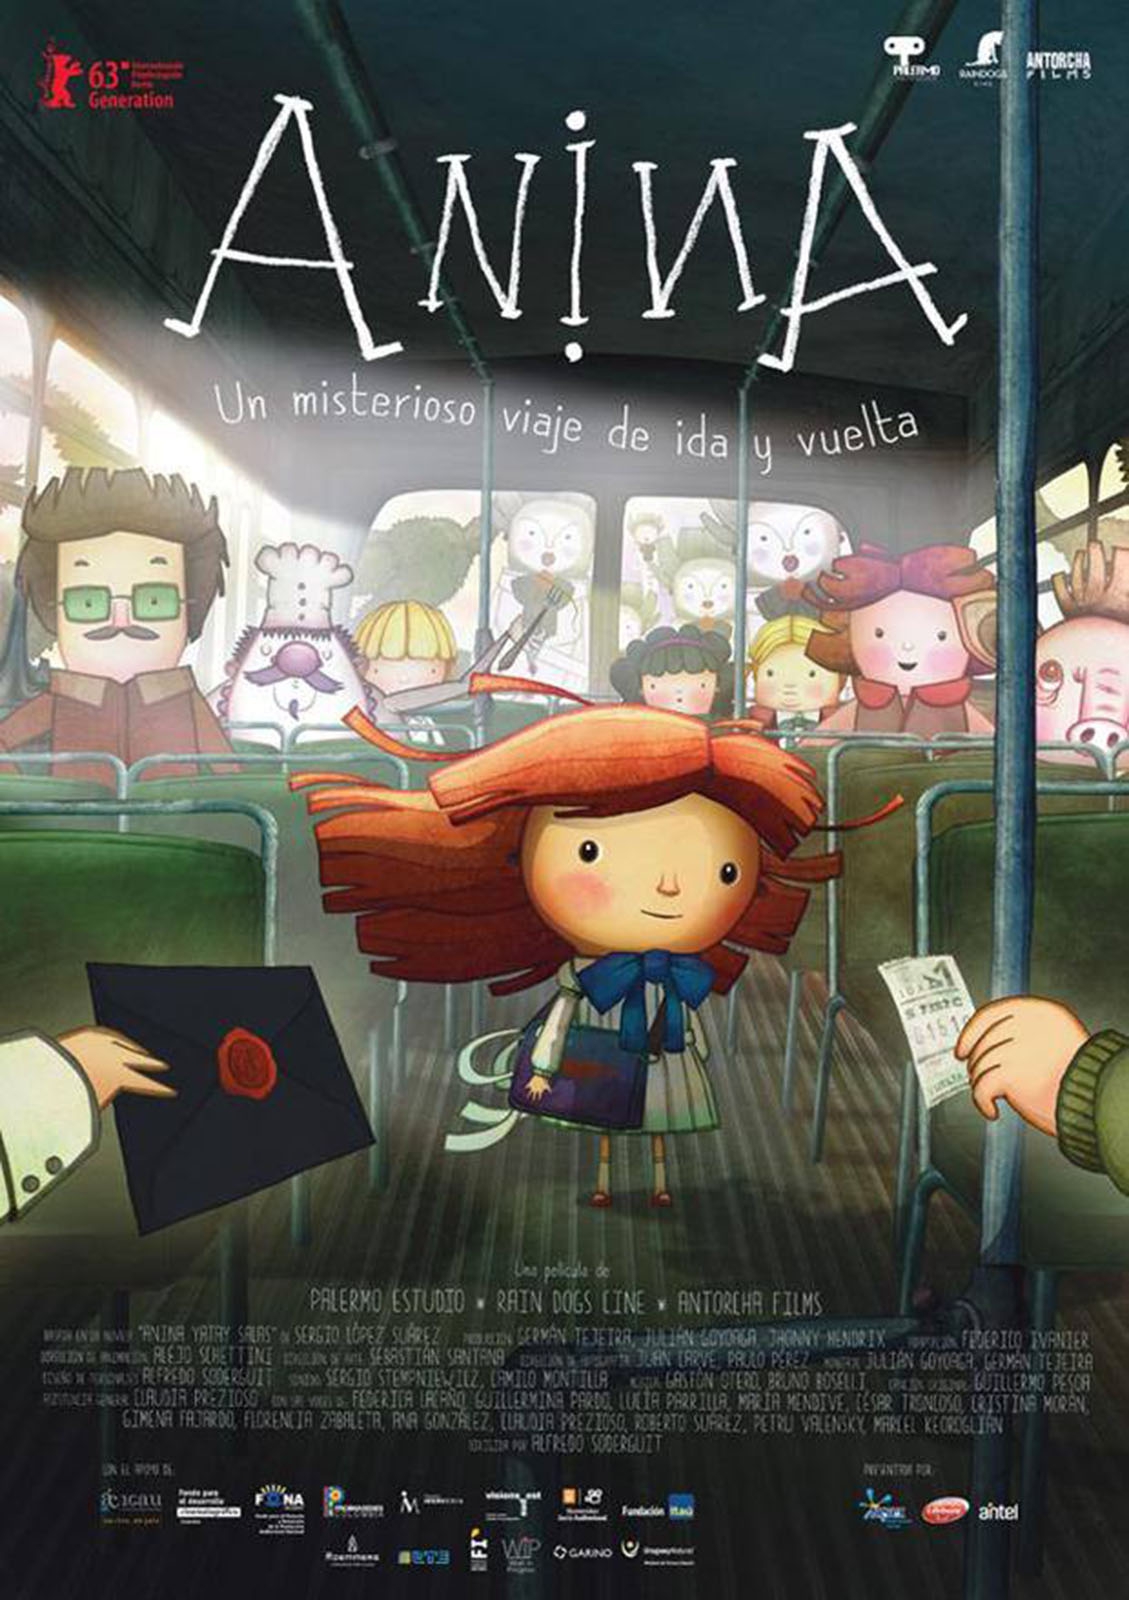  Anina (2015) Poster 